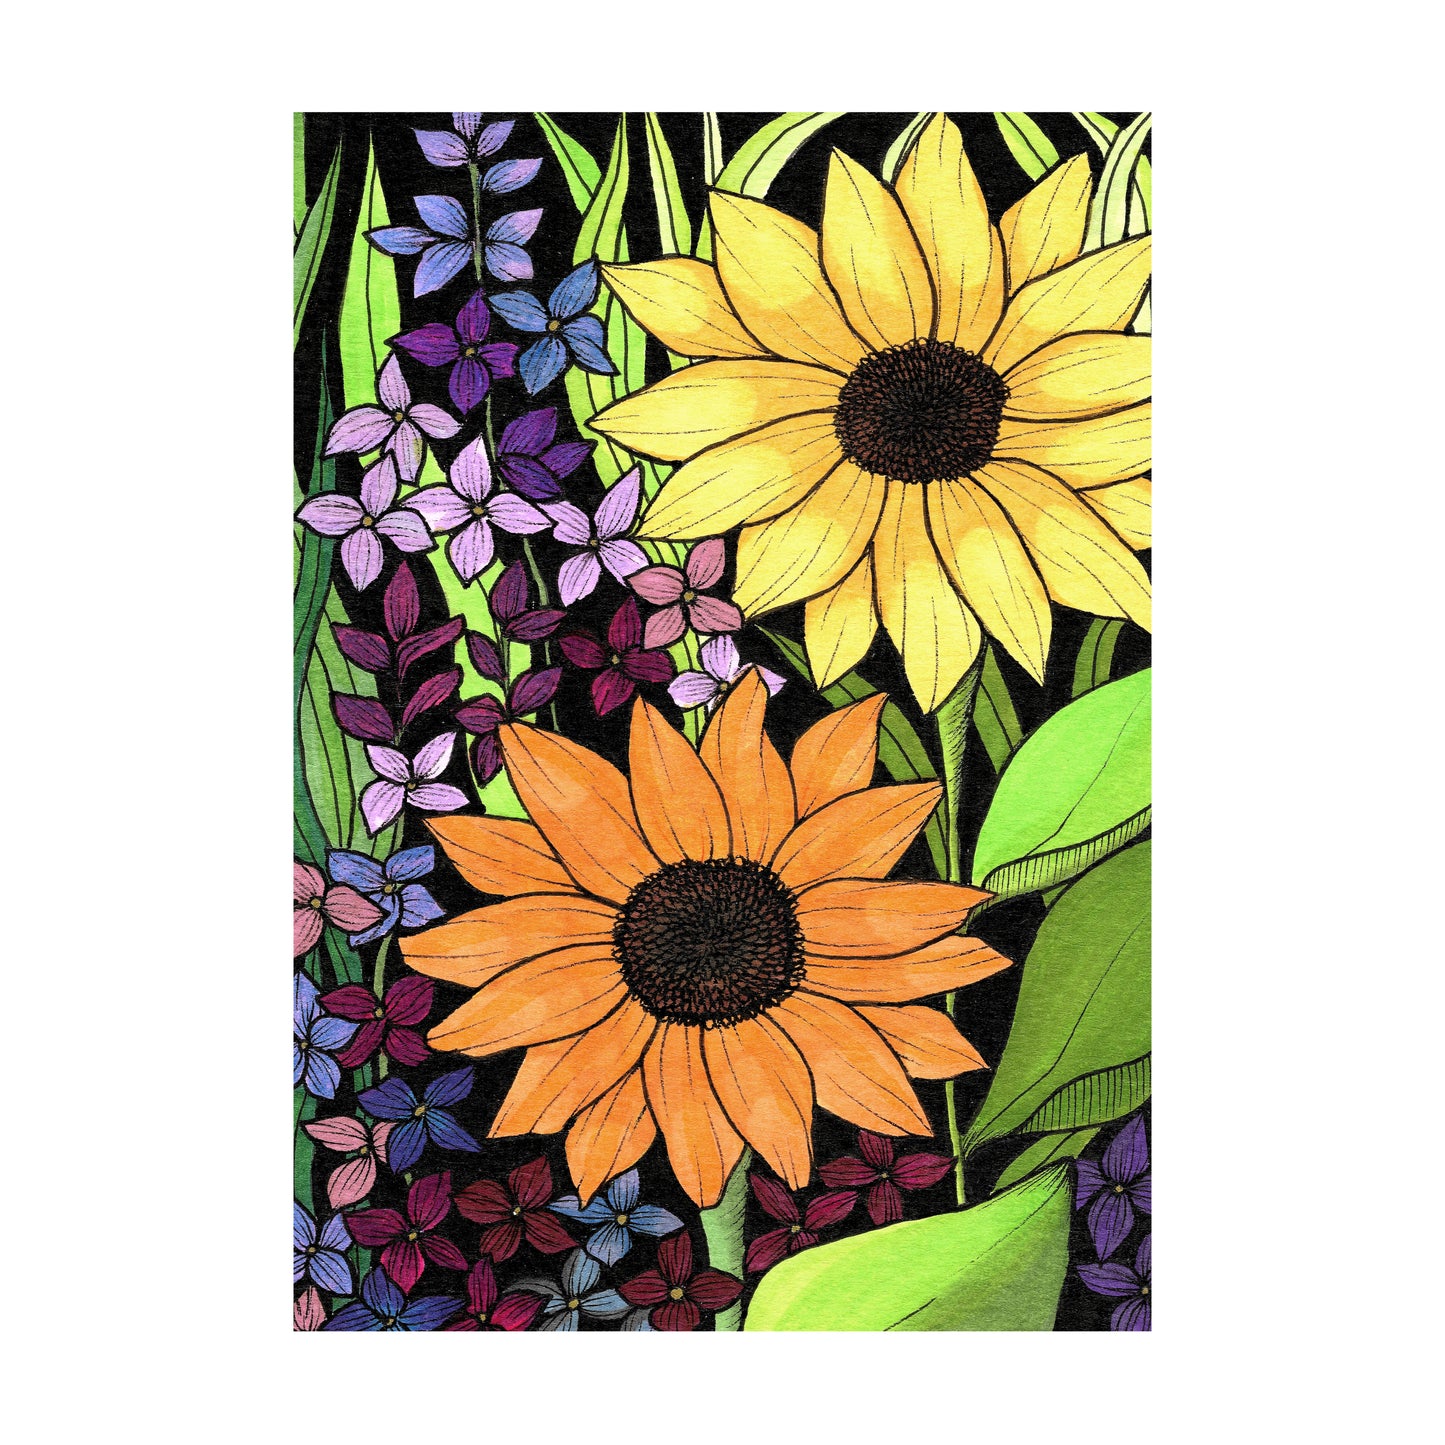 Signed & Matted Print - Sunflower & Delphinium